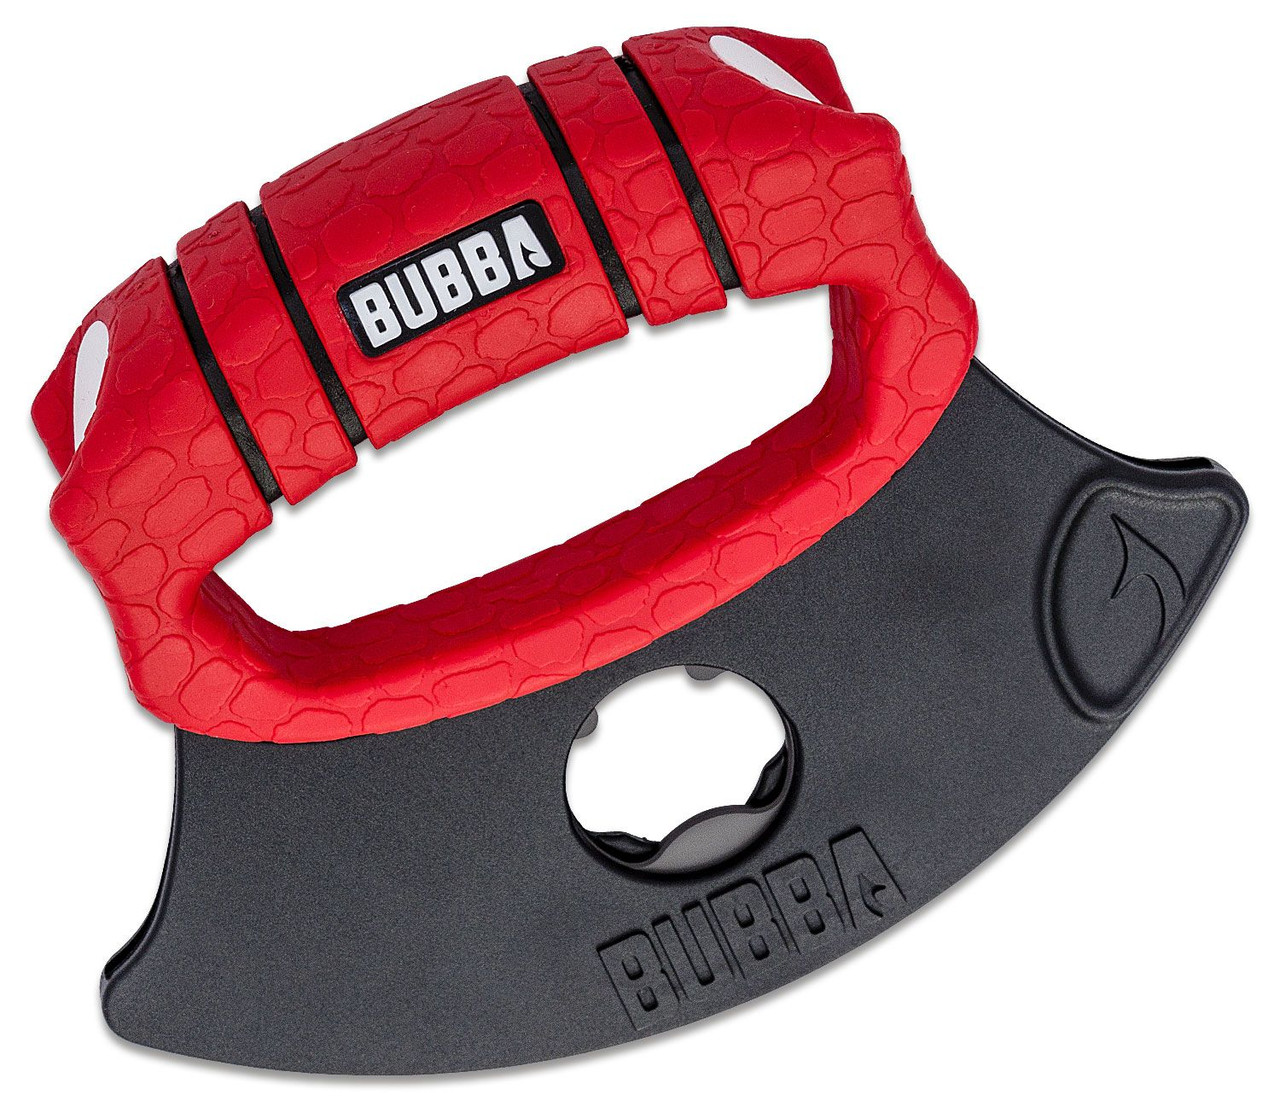 Bubba Blade Proteus Ulu Knife, 1989606, 5.75" Gray Blade, Red TPR Handle, Black Polymer Sheath